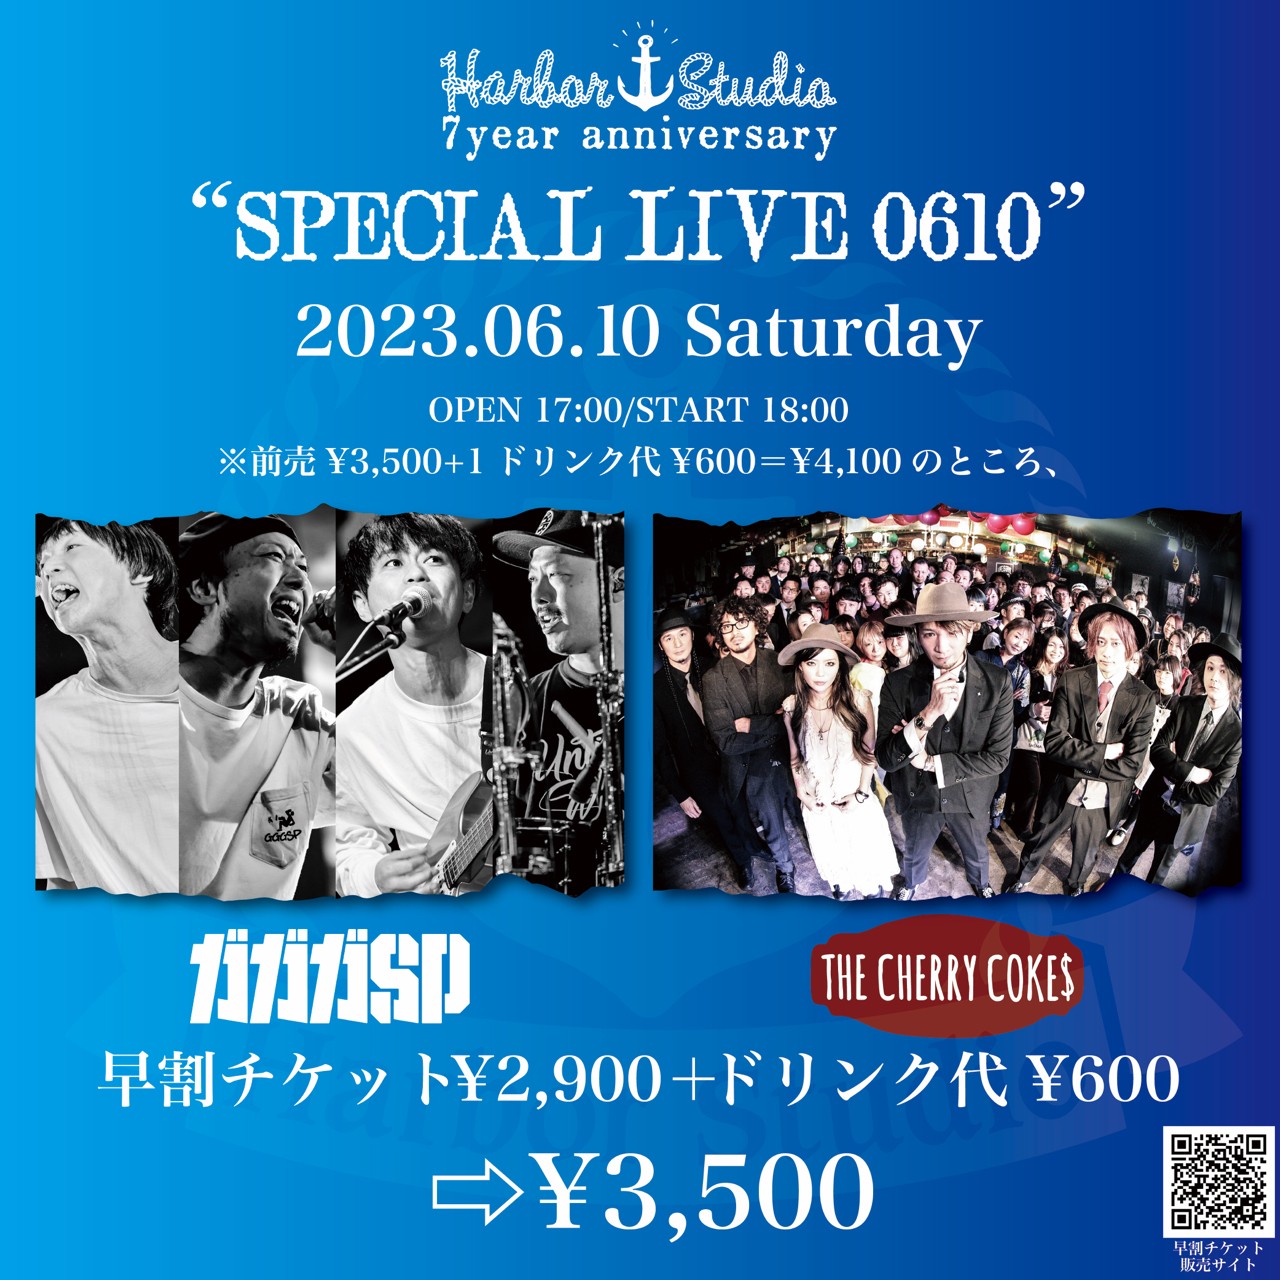 Harbor Studio 7year anniversary “SPECIAL LIVE 0610”